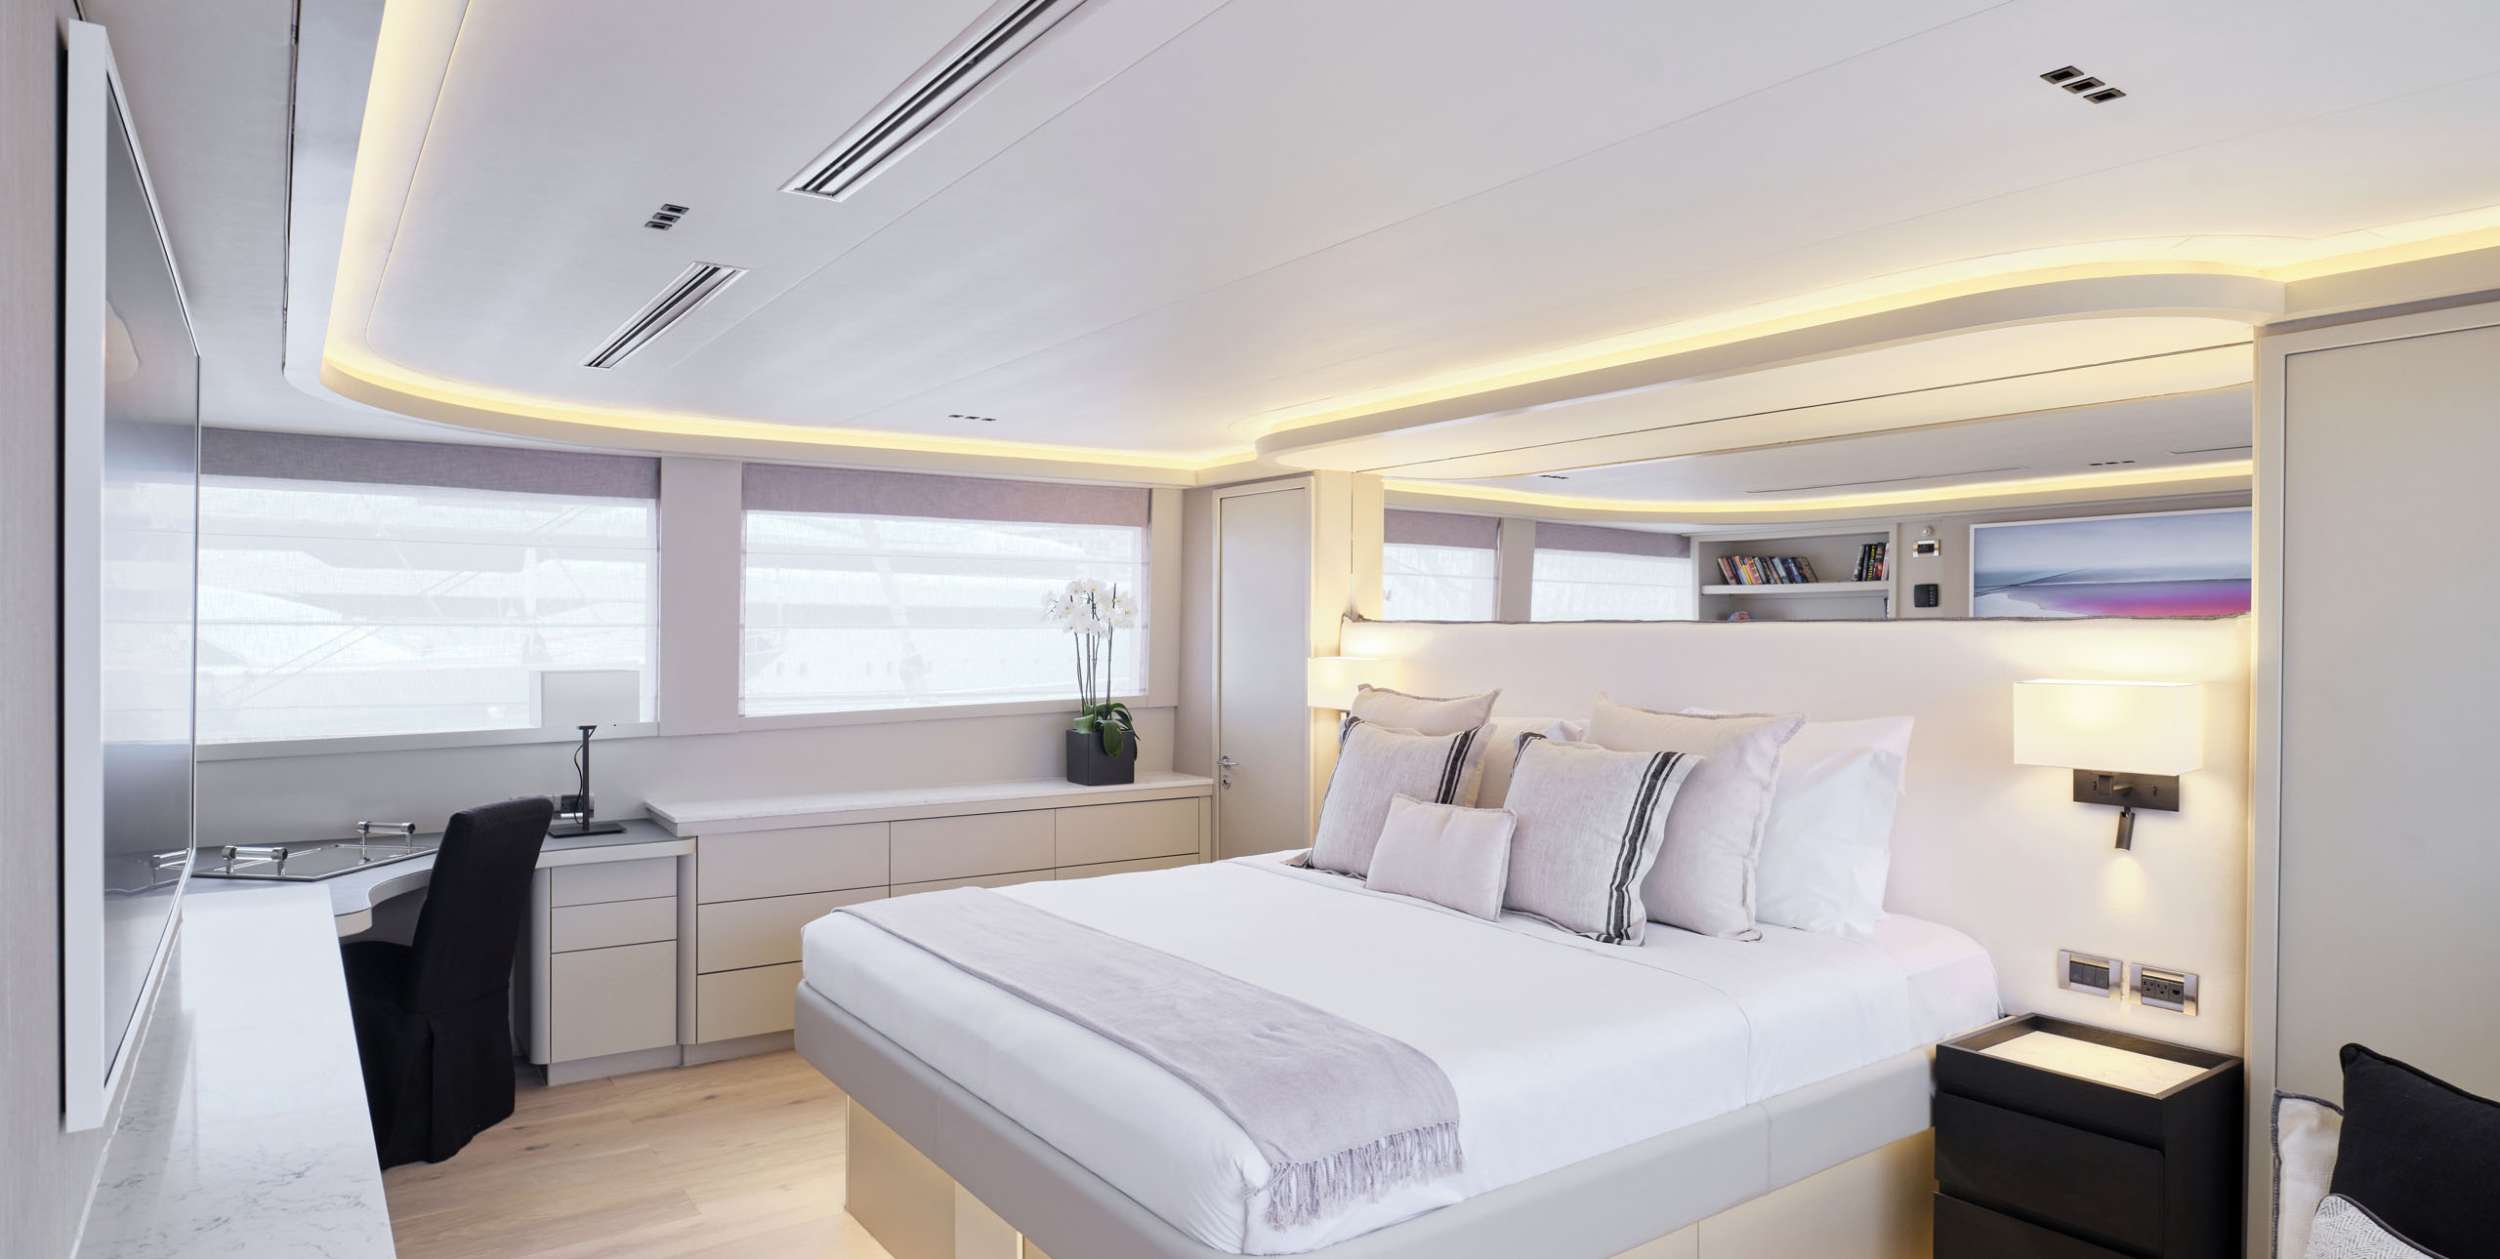 ENDLESS SUMMER Yacht Charter - VIP Suite lower deck